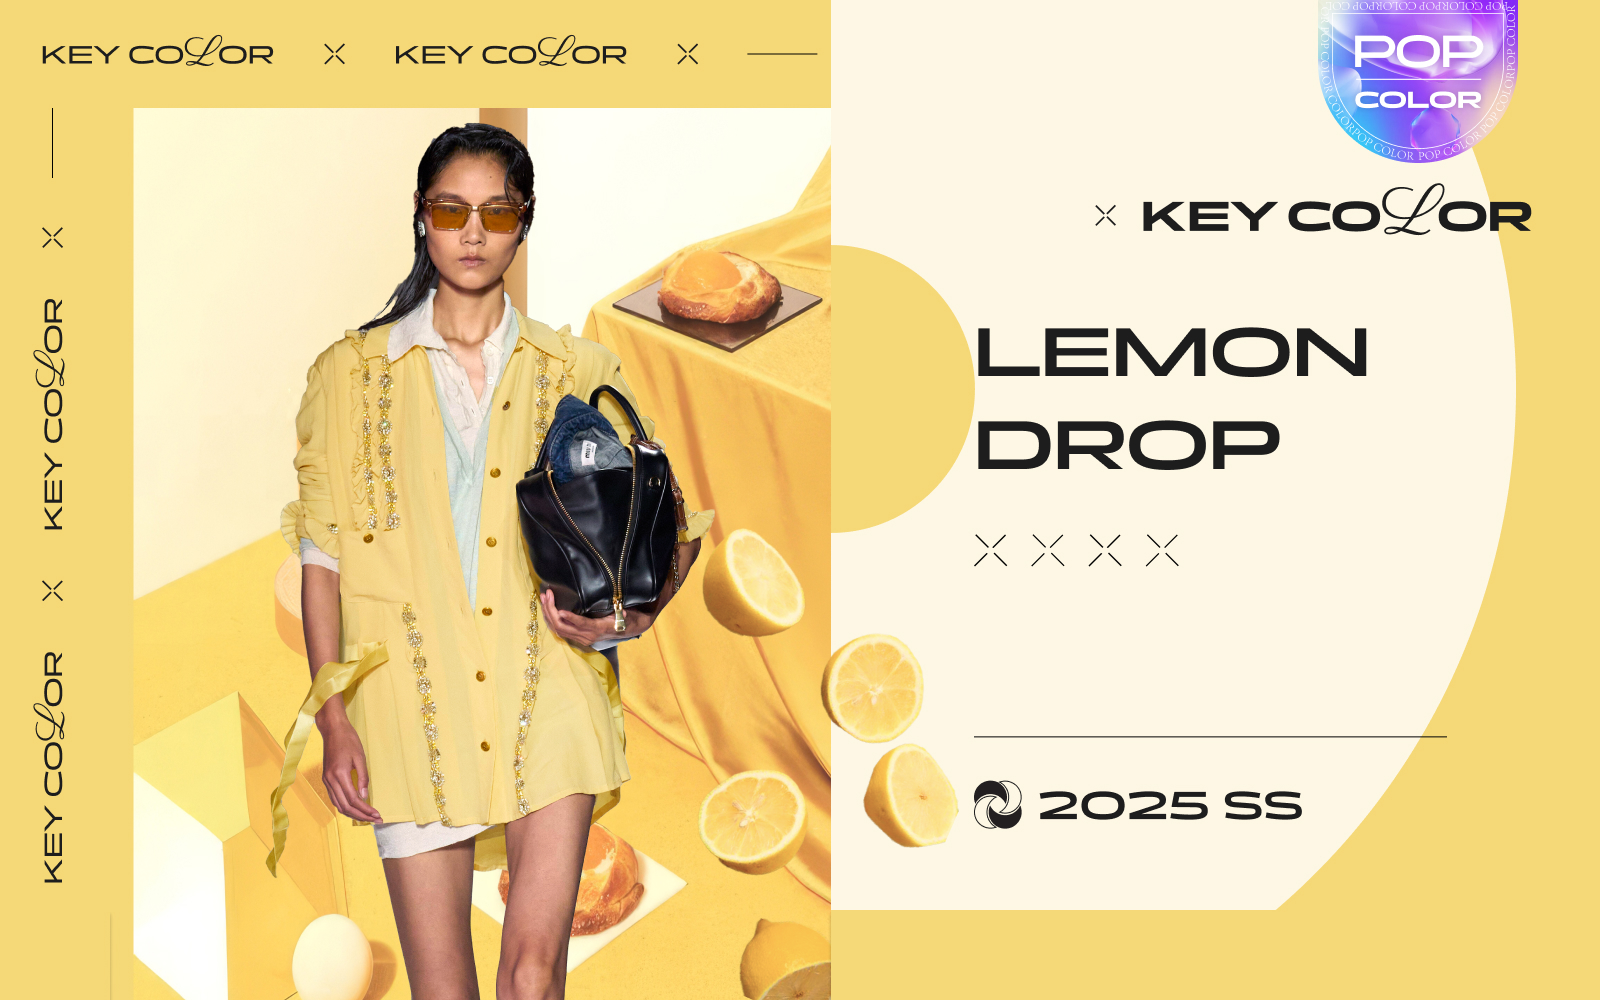 Lemon Drop -- The Color Trend for Womenswear